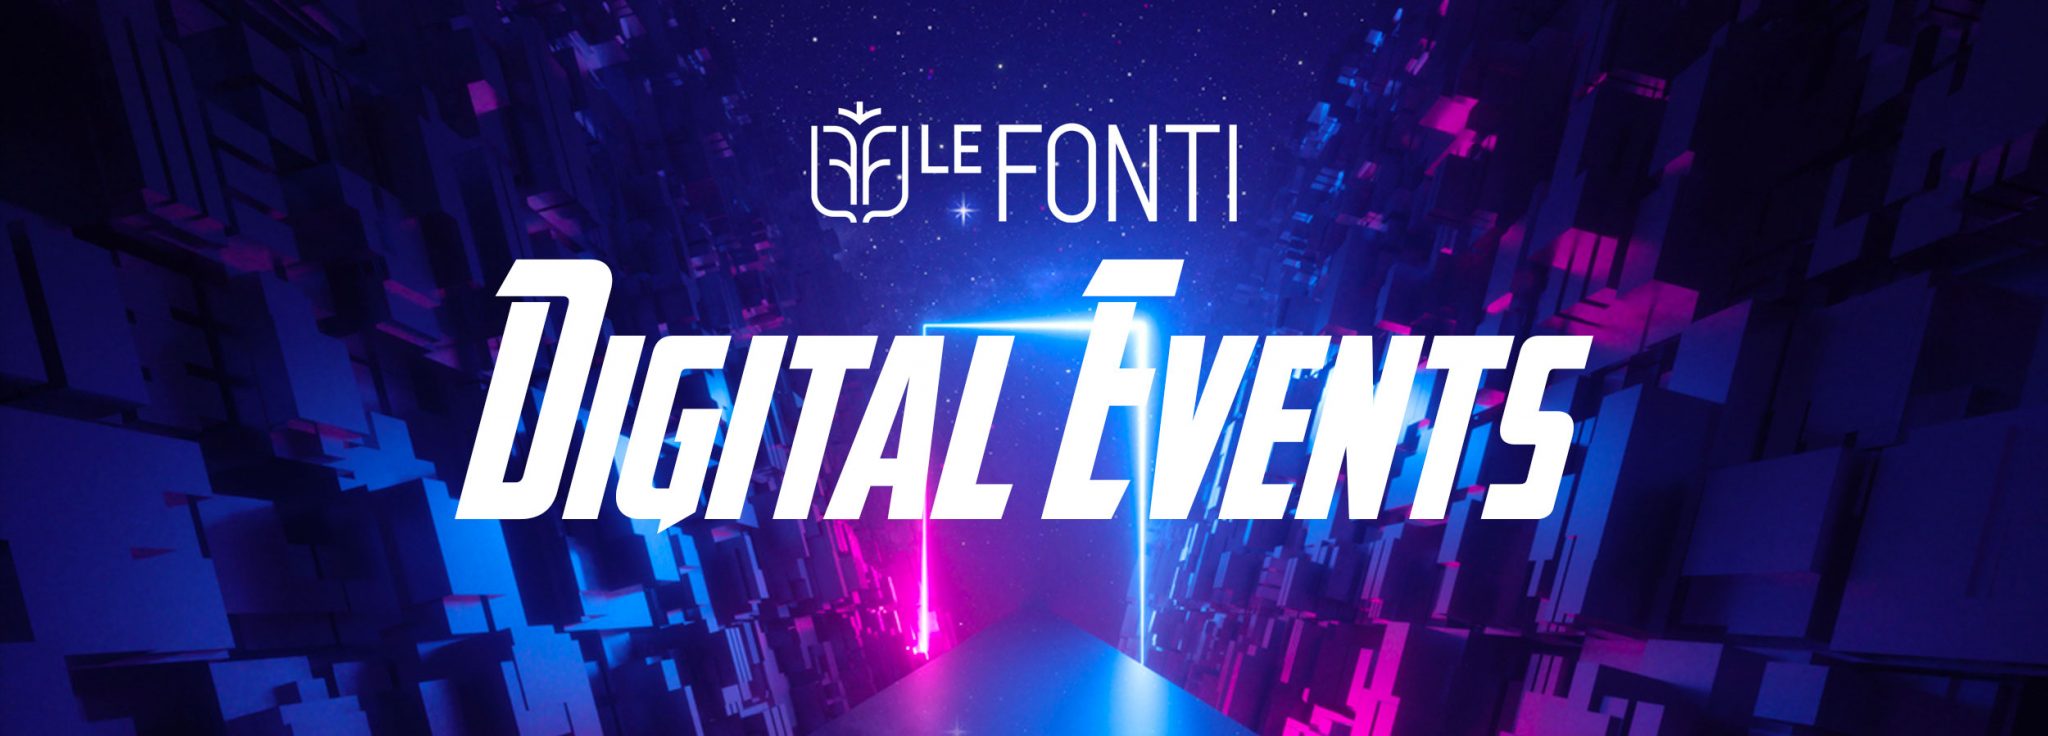 Digital-events